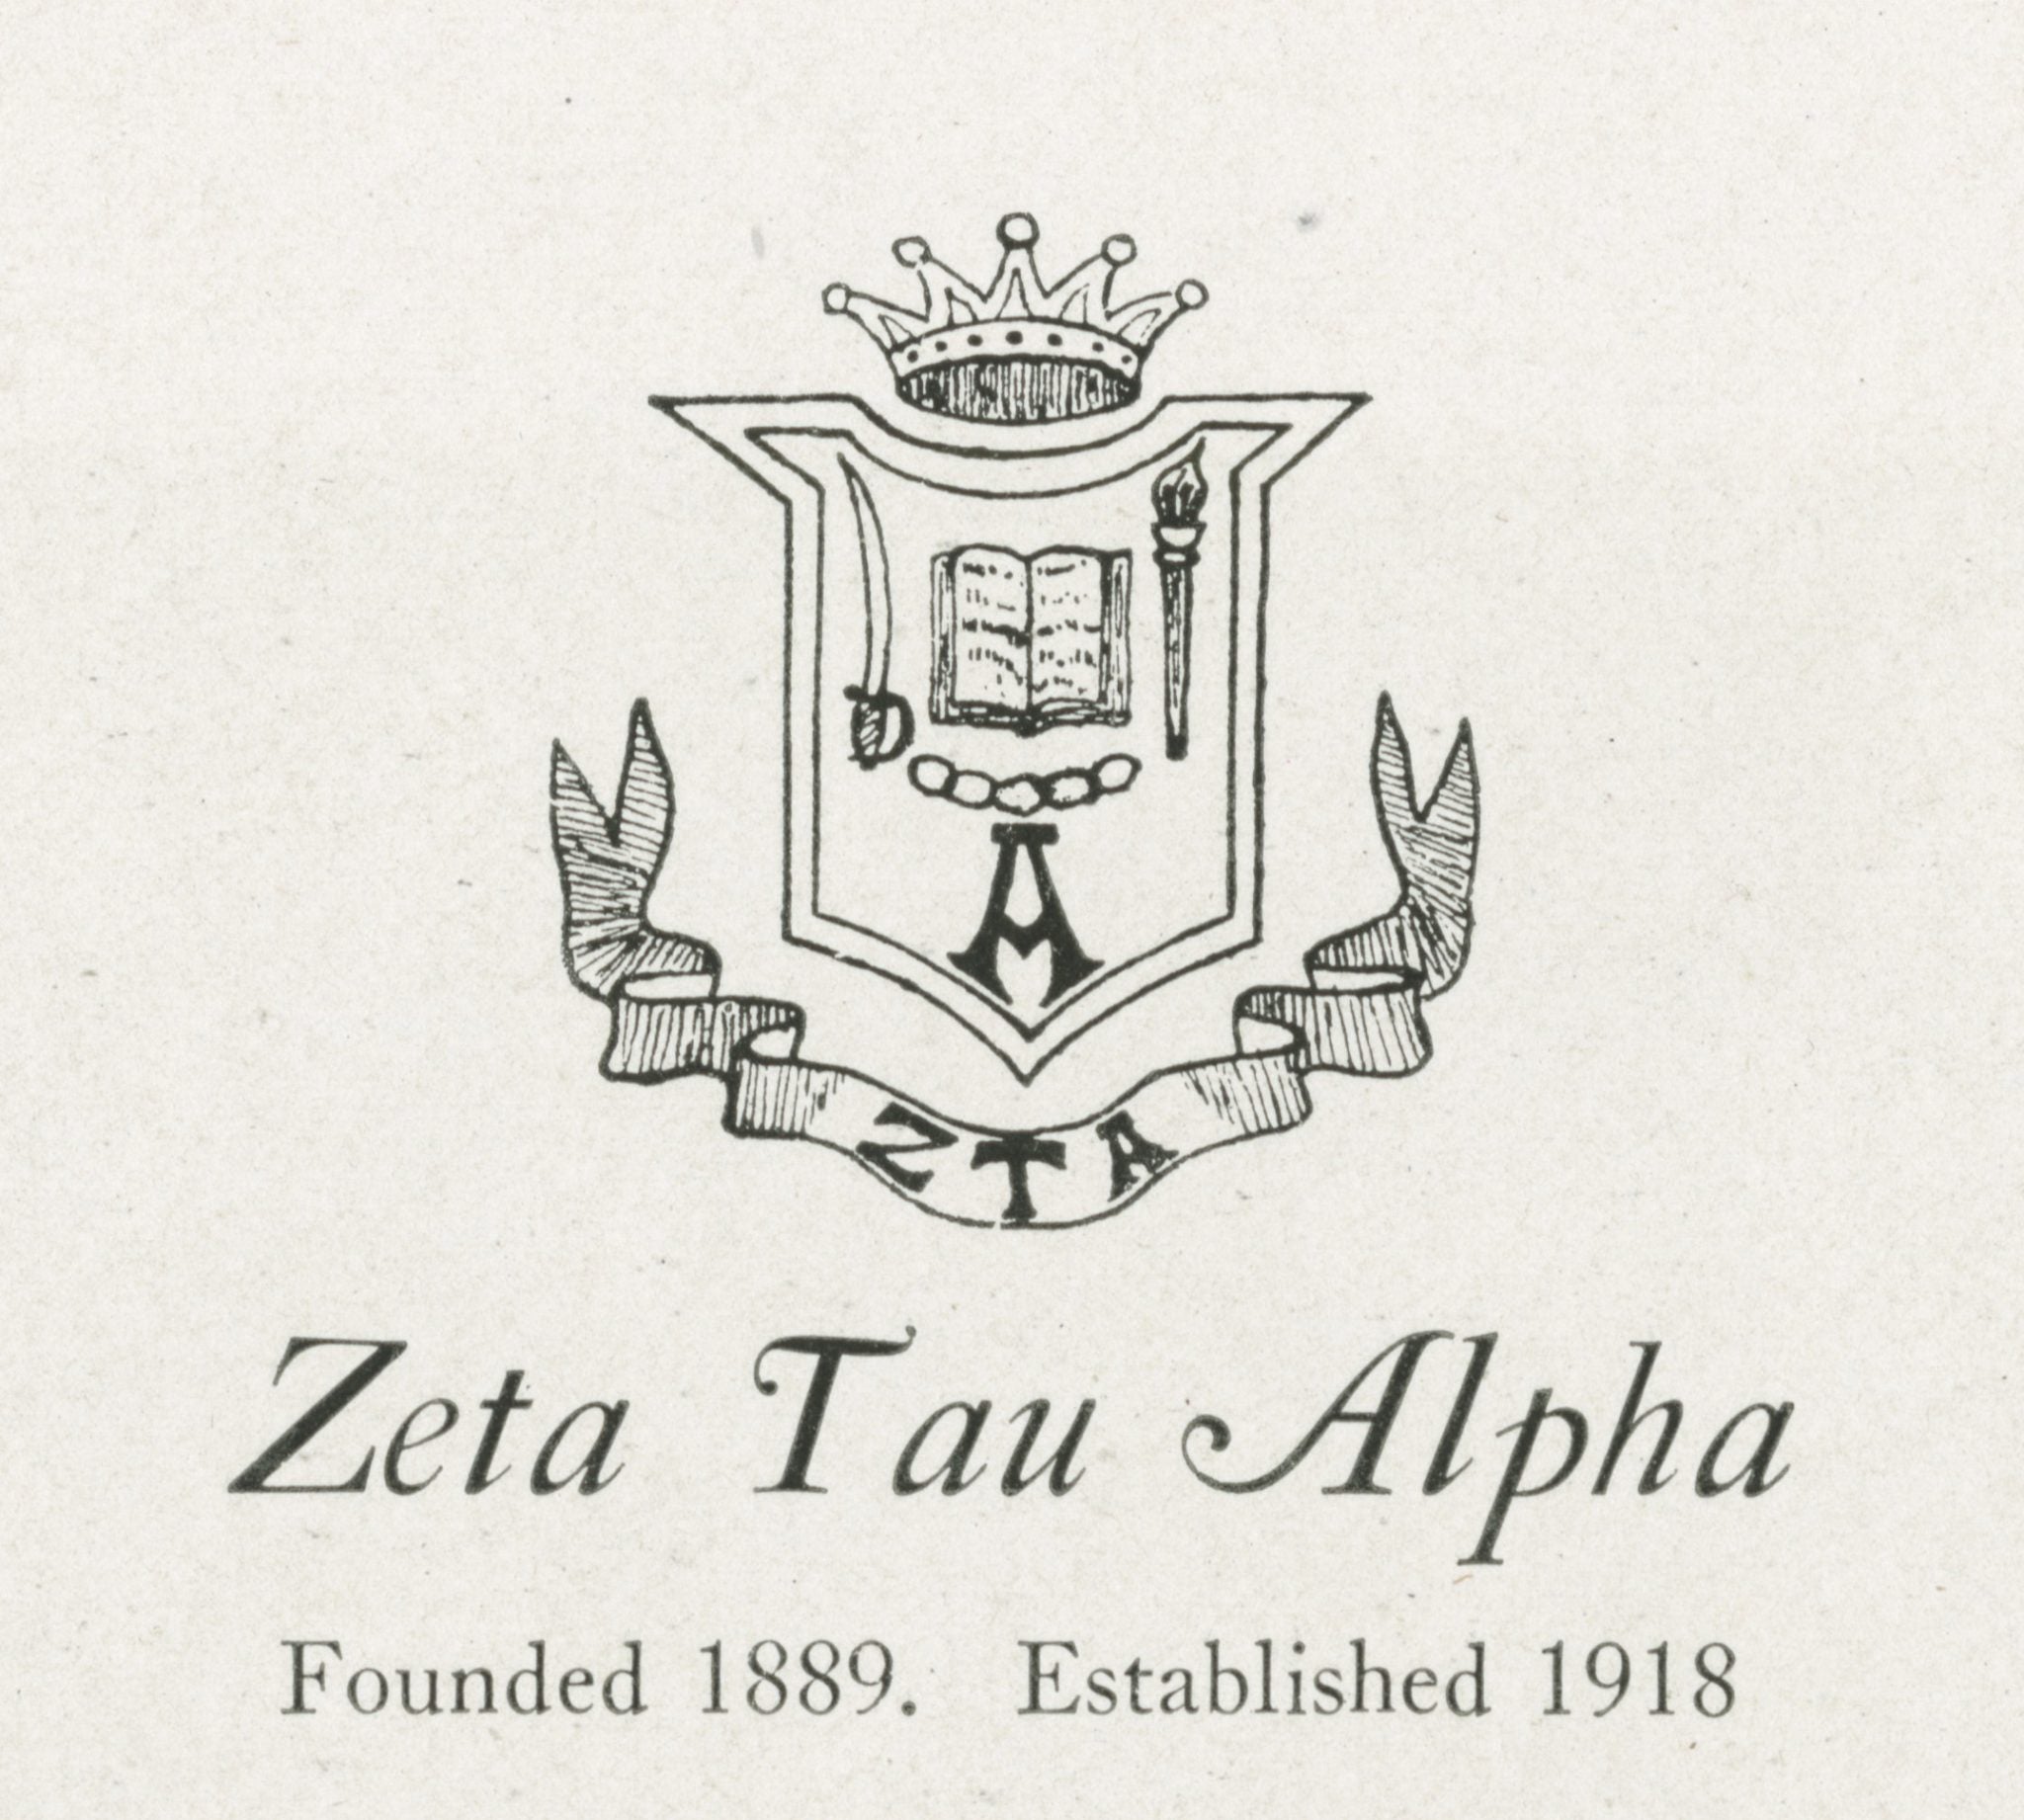 Sororities at Penn: Zeta Tau Alpha